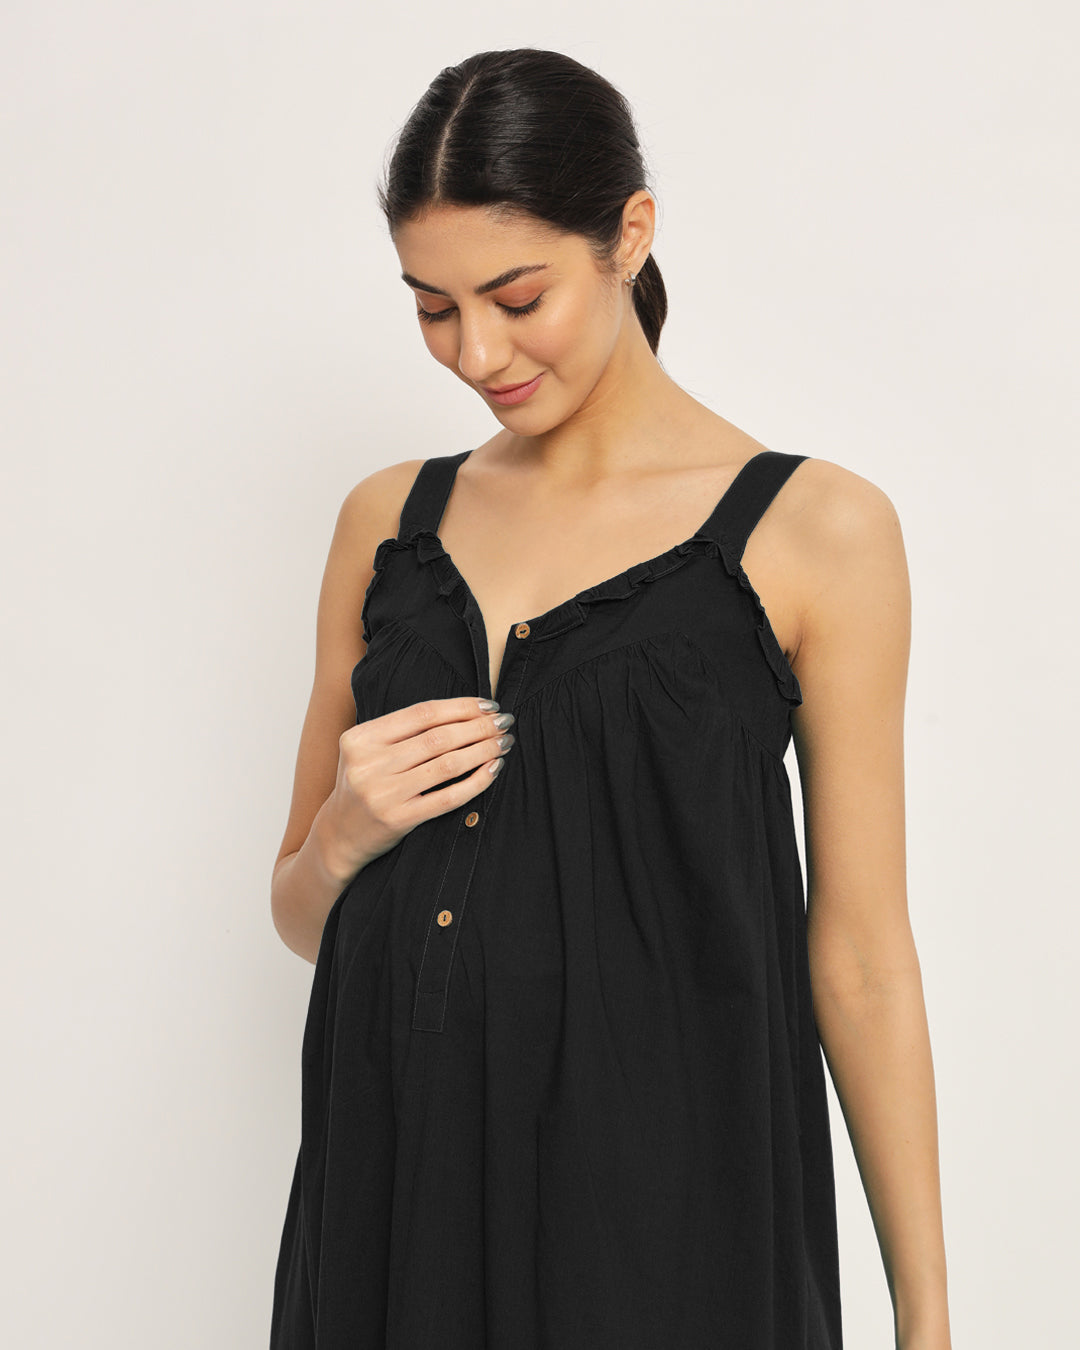 Classic Black Preggo Pretty Maternity & Nursing Dress